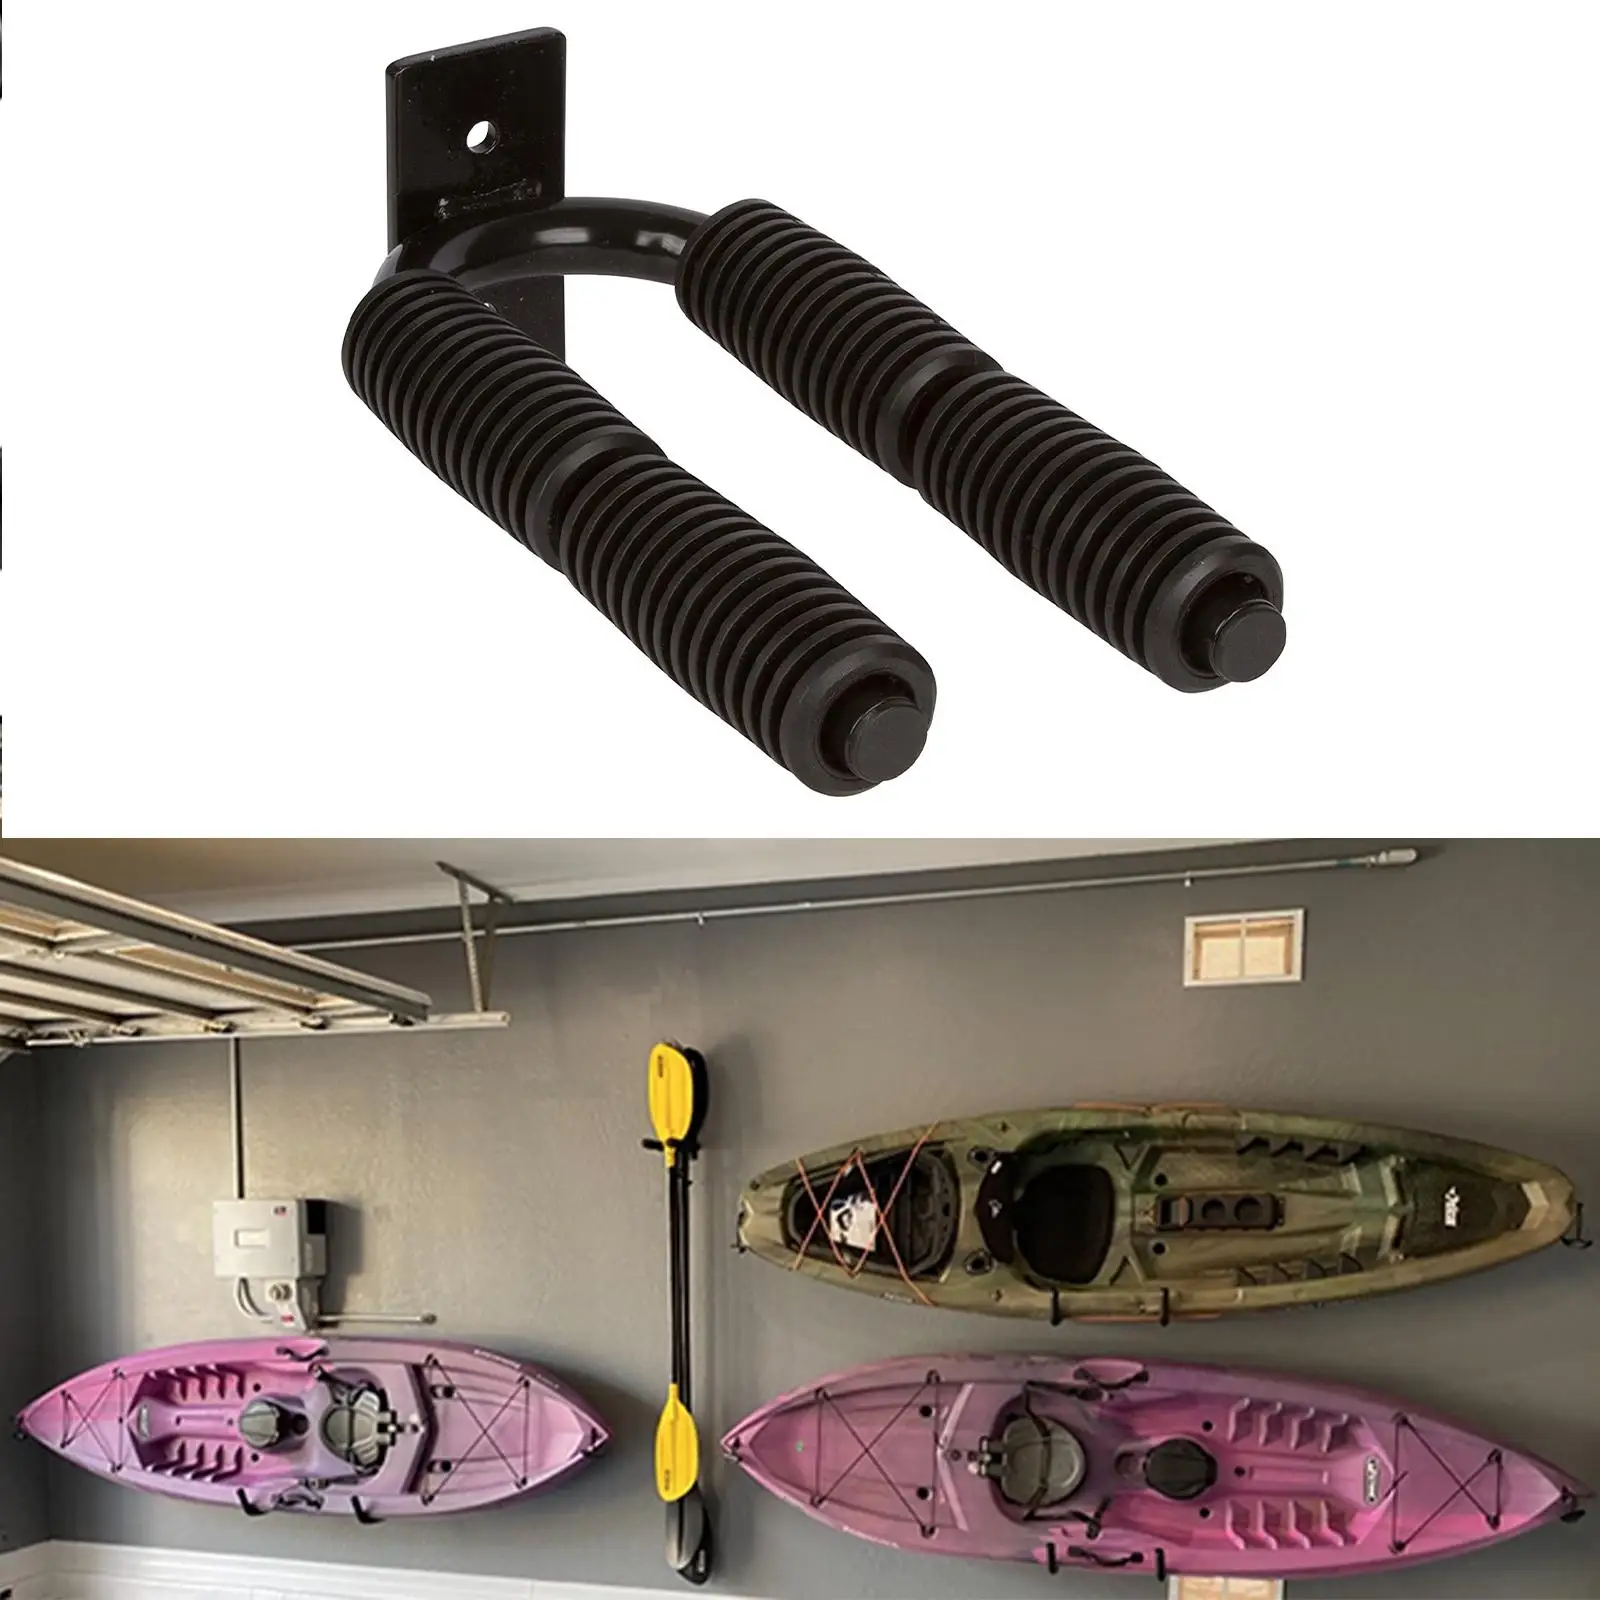 Metal Kayak Paddle Storage Rack Wall Mount Oar Storage Organization Accessories Black for Docks Sheds Indoor Garage